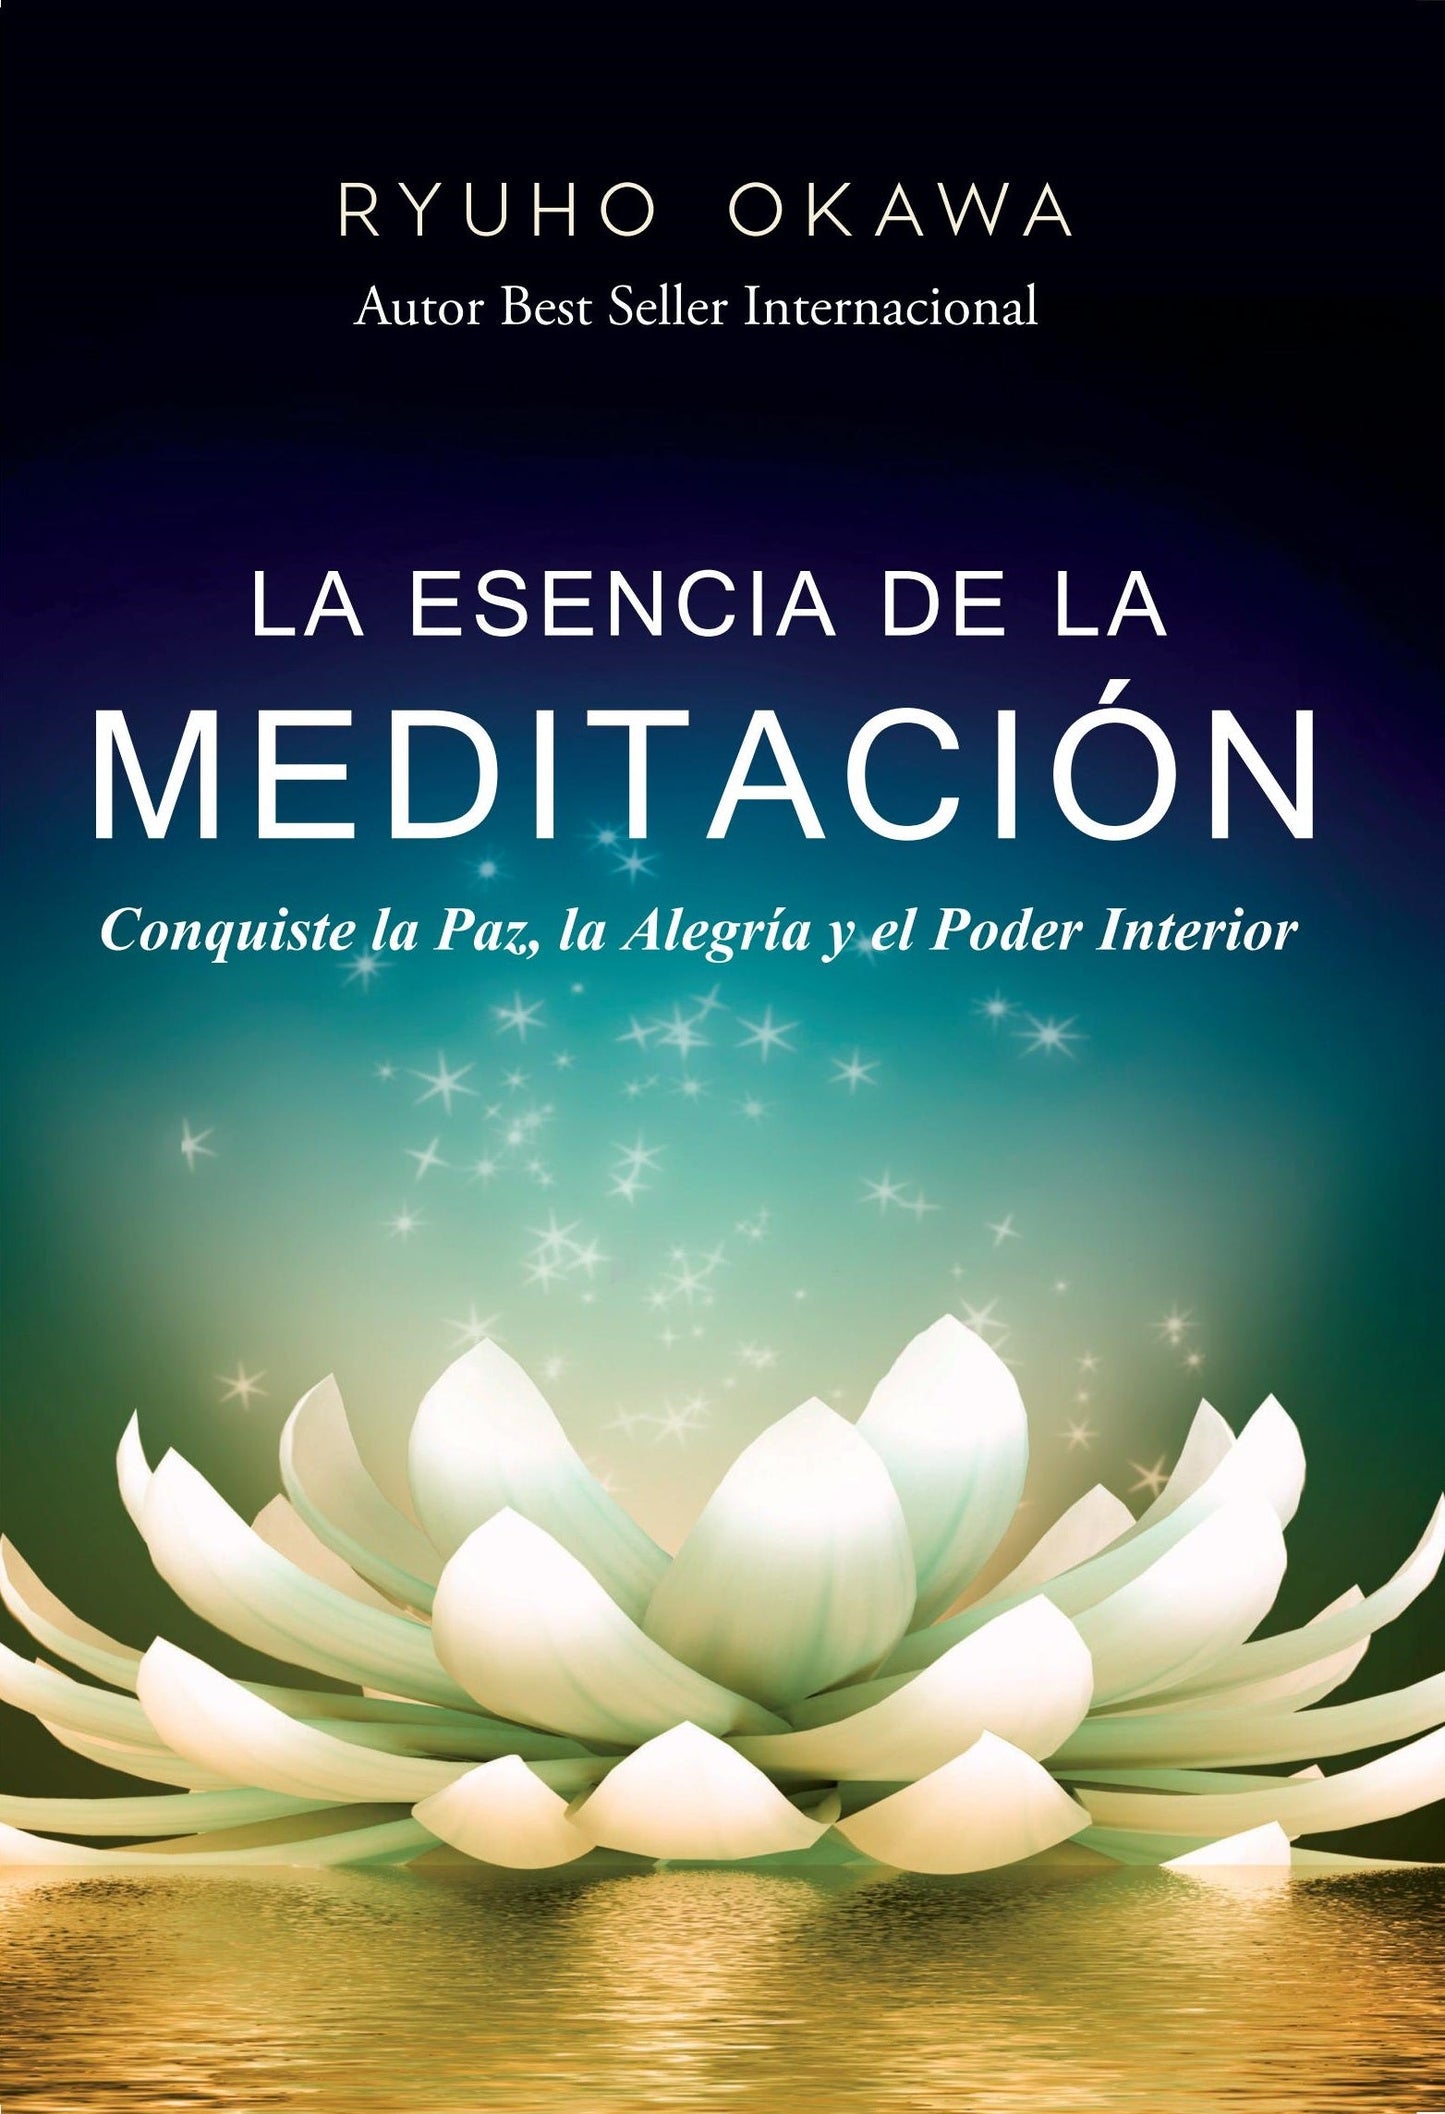 The Miracle of Meditation : Opening Your Life to Peace, Joy and the Power Within, Ryuho Okawa, Spanish - IRH Press International